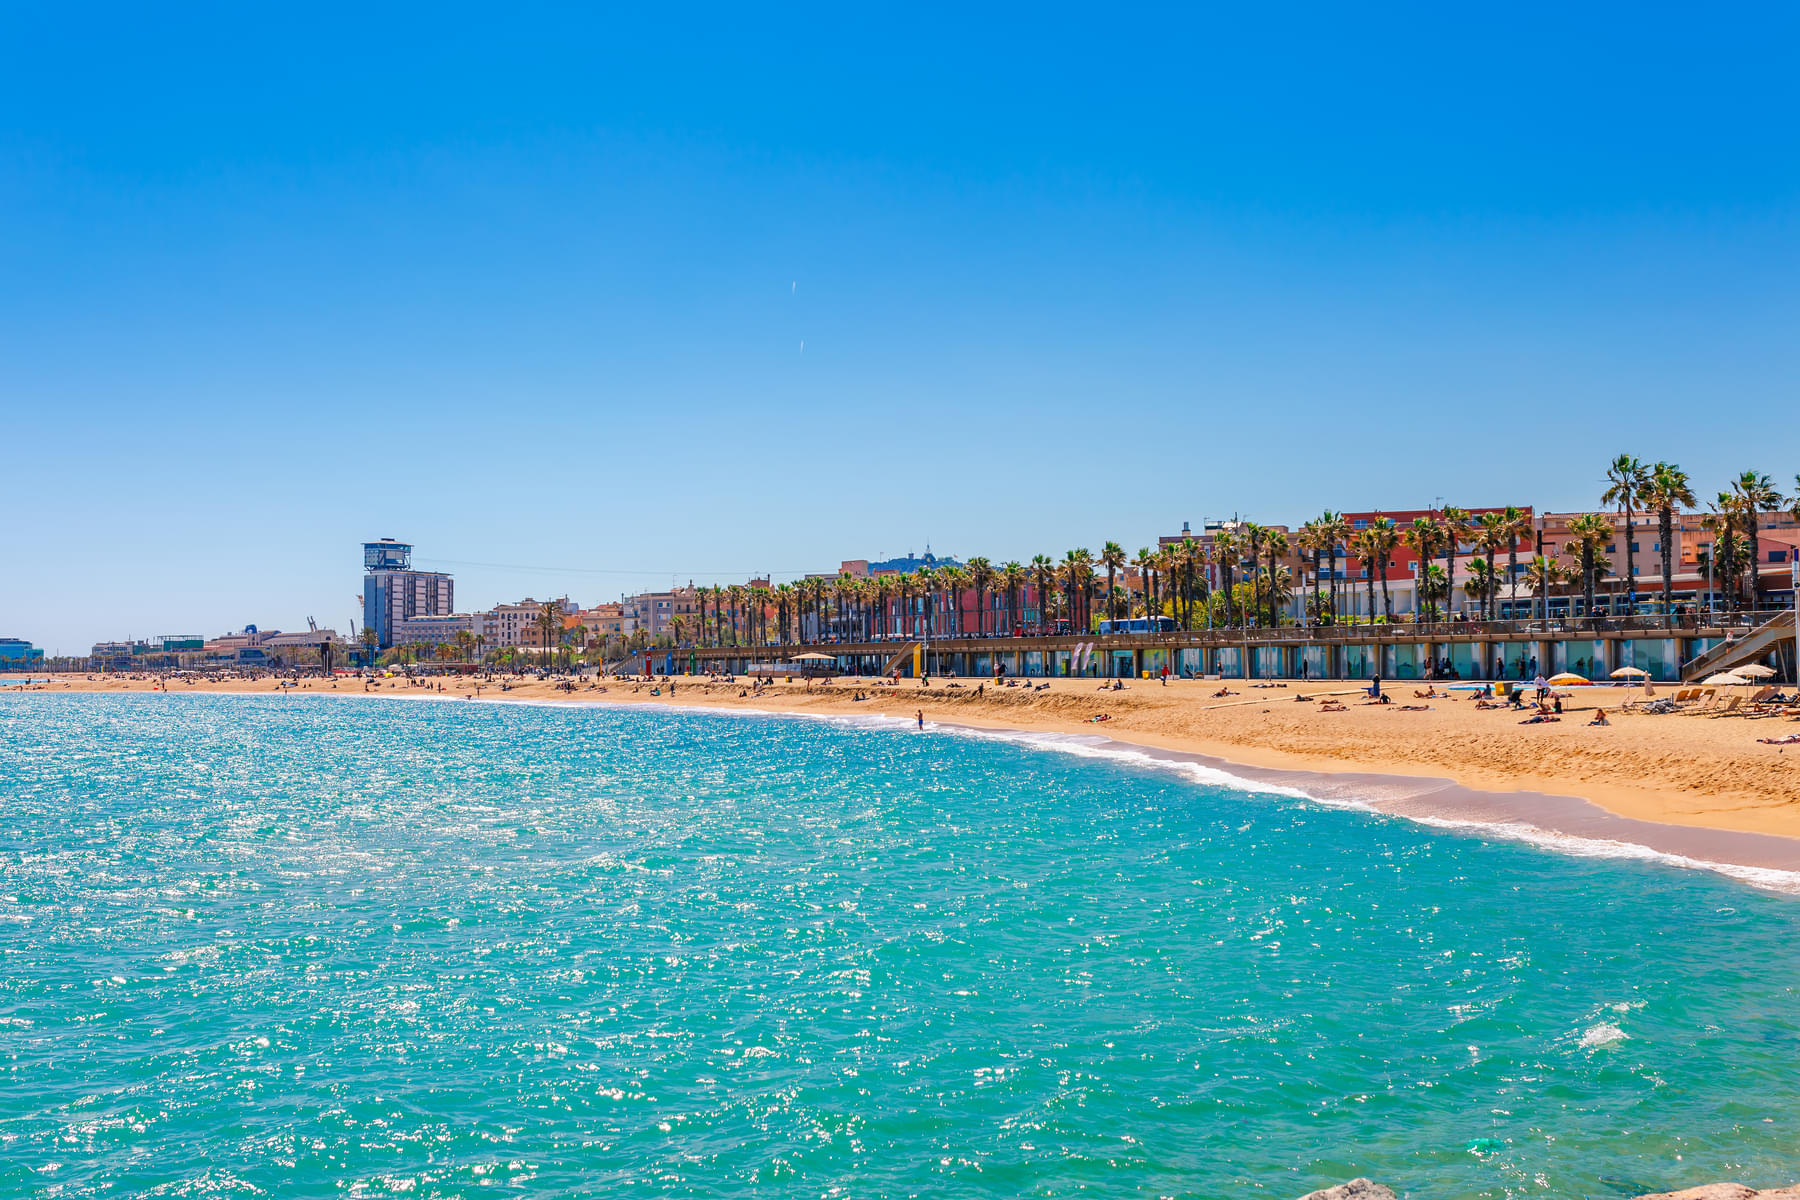 The beautiful beach of the Barceloneta